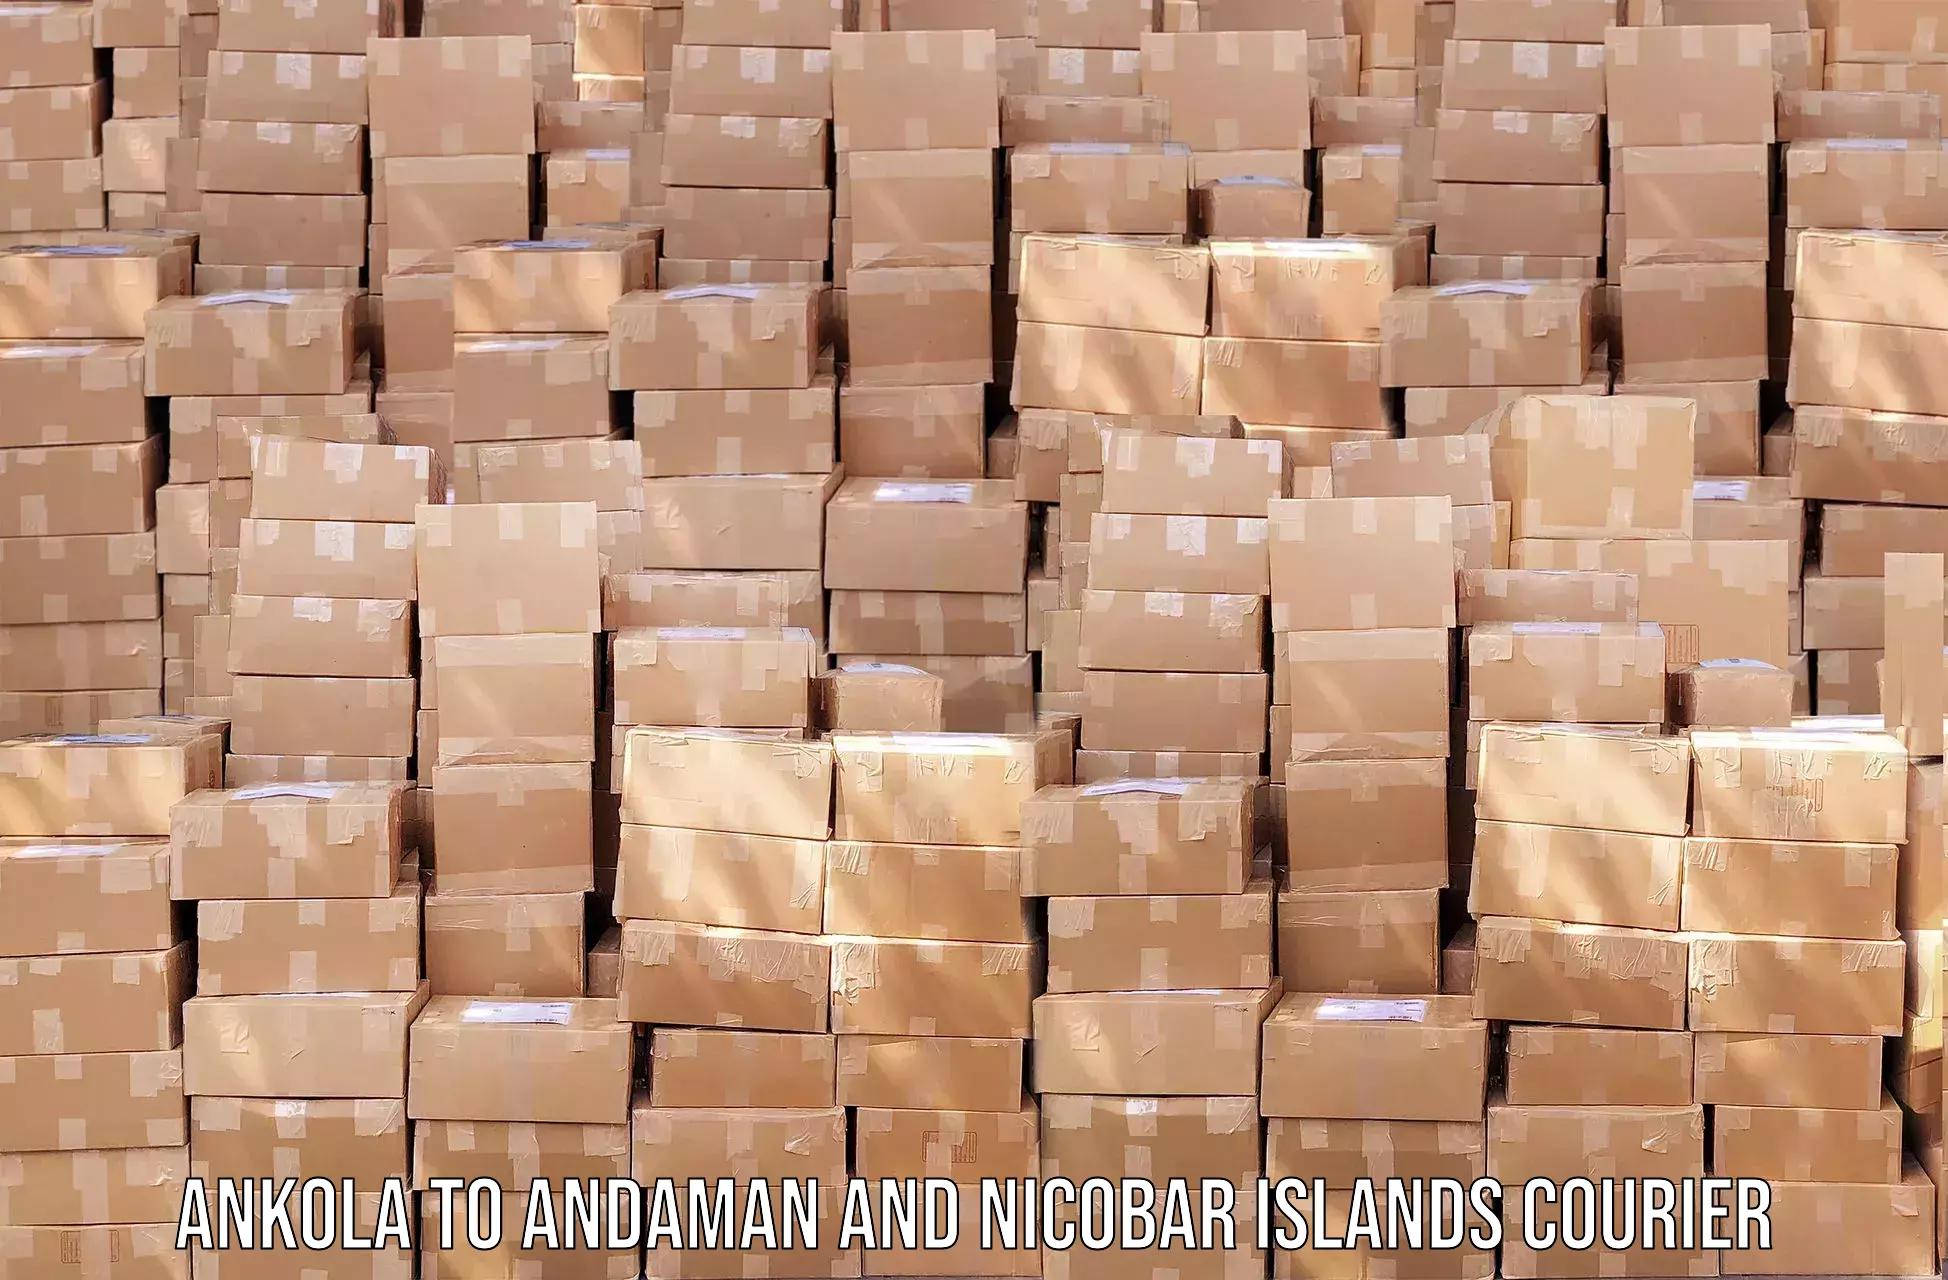 Multi-city courier Ankola to Andaman and Nicobar Islands